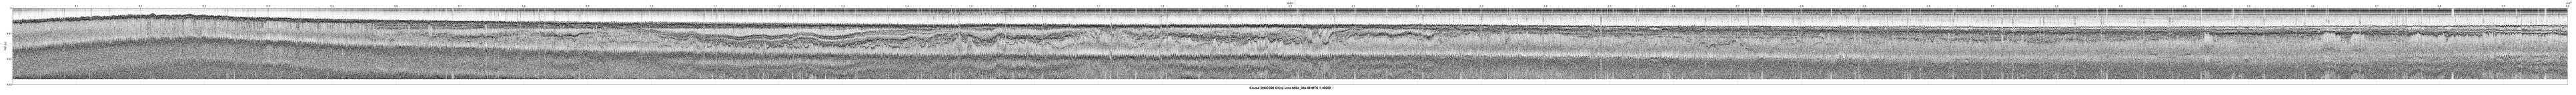 00SCC02 b00c_38a seismic profile image